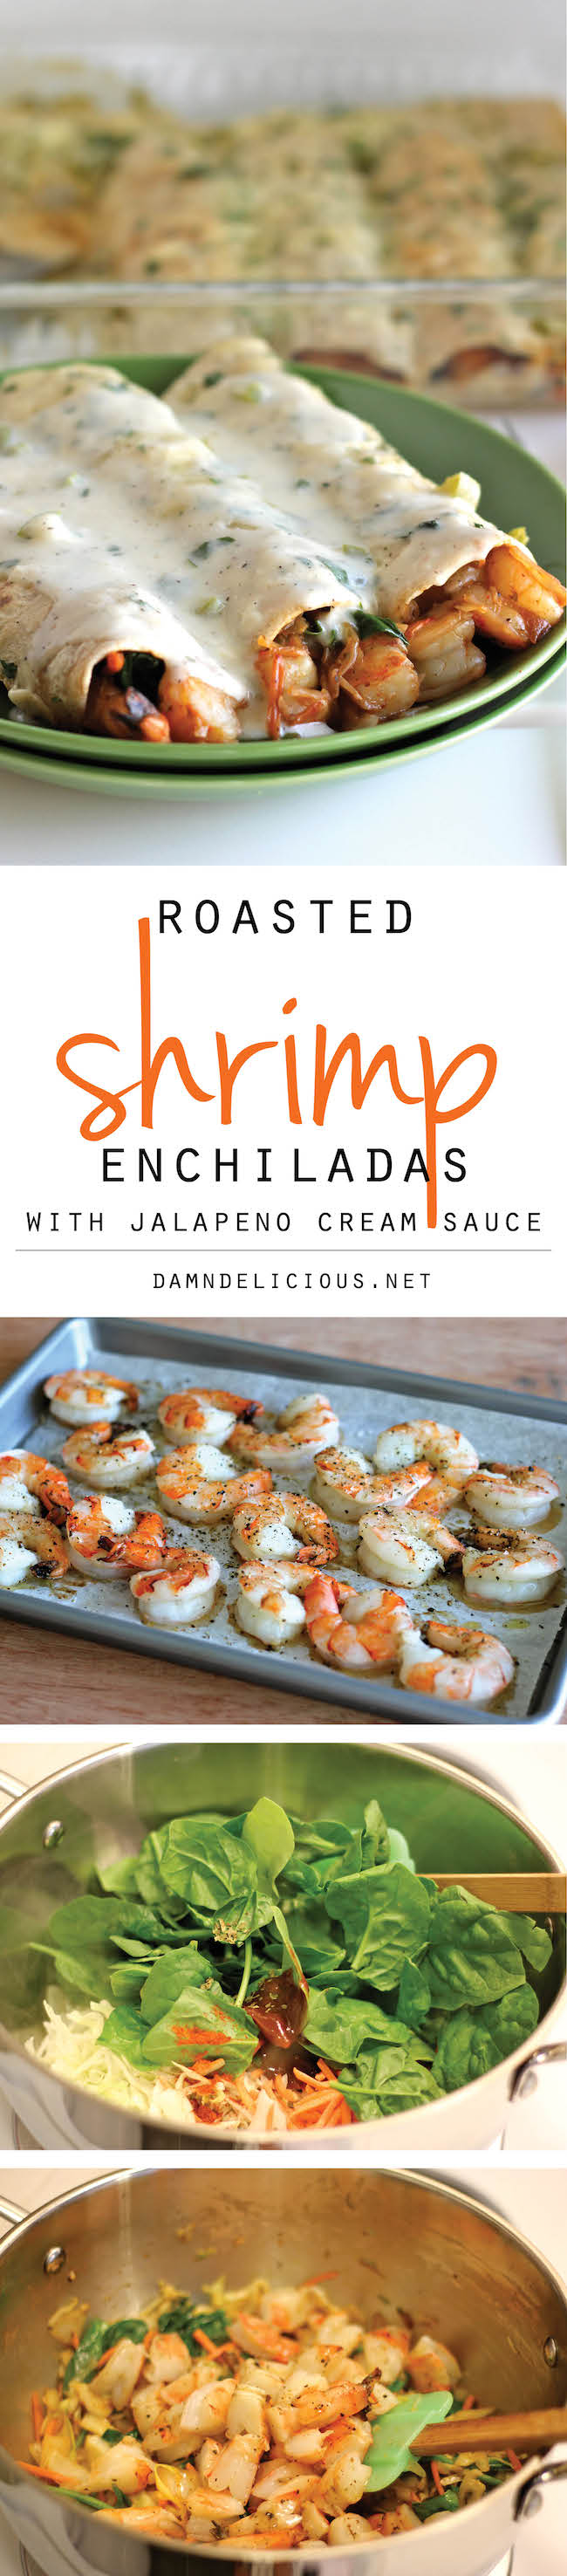 Roasted Shrimp Enchiladas with Jalapeño Cream Sauce - Smothered in a rich, jalapeño cream sauce, how can you resist?!